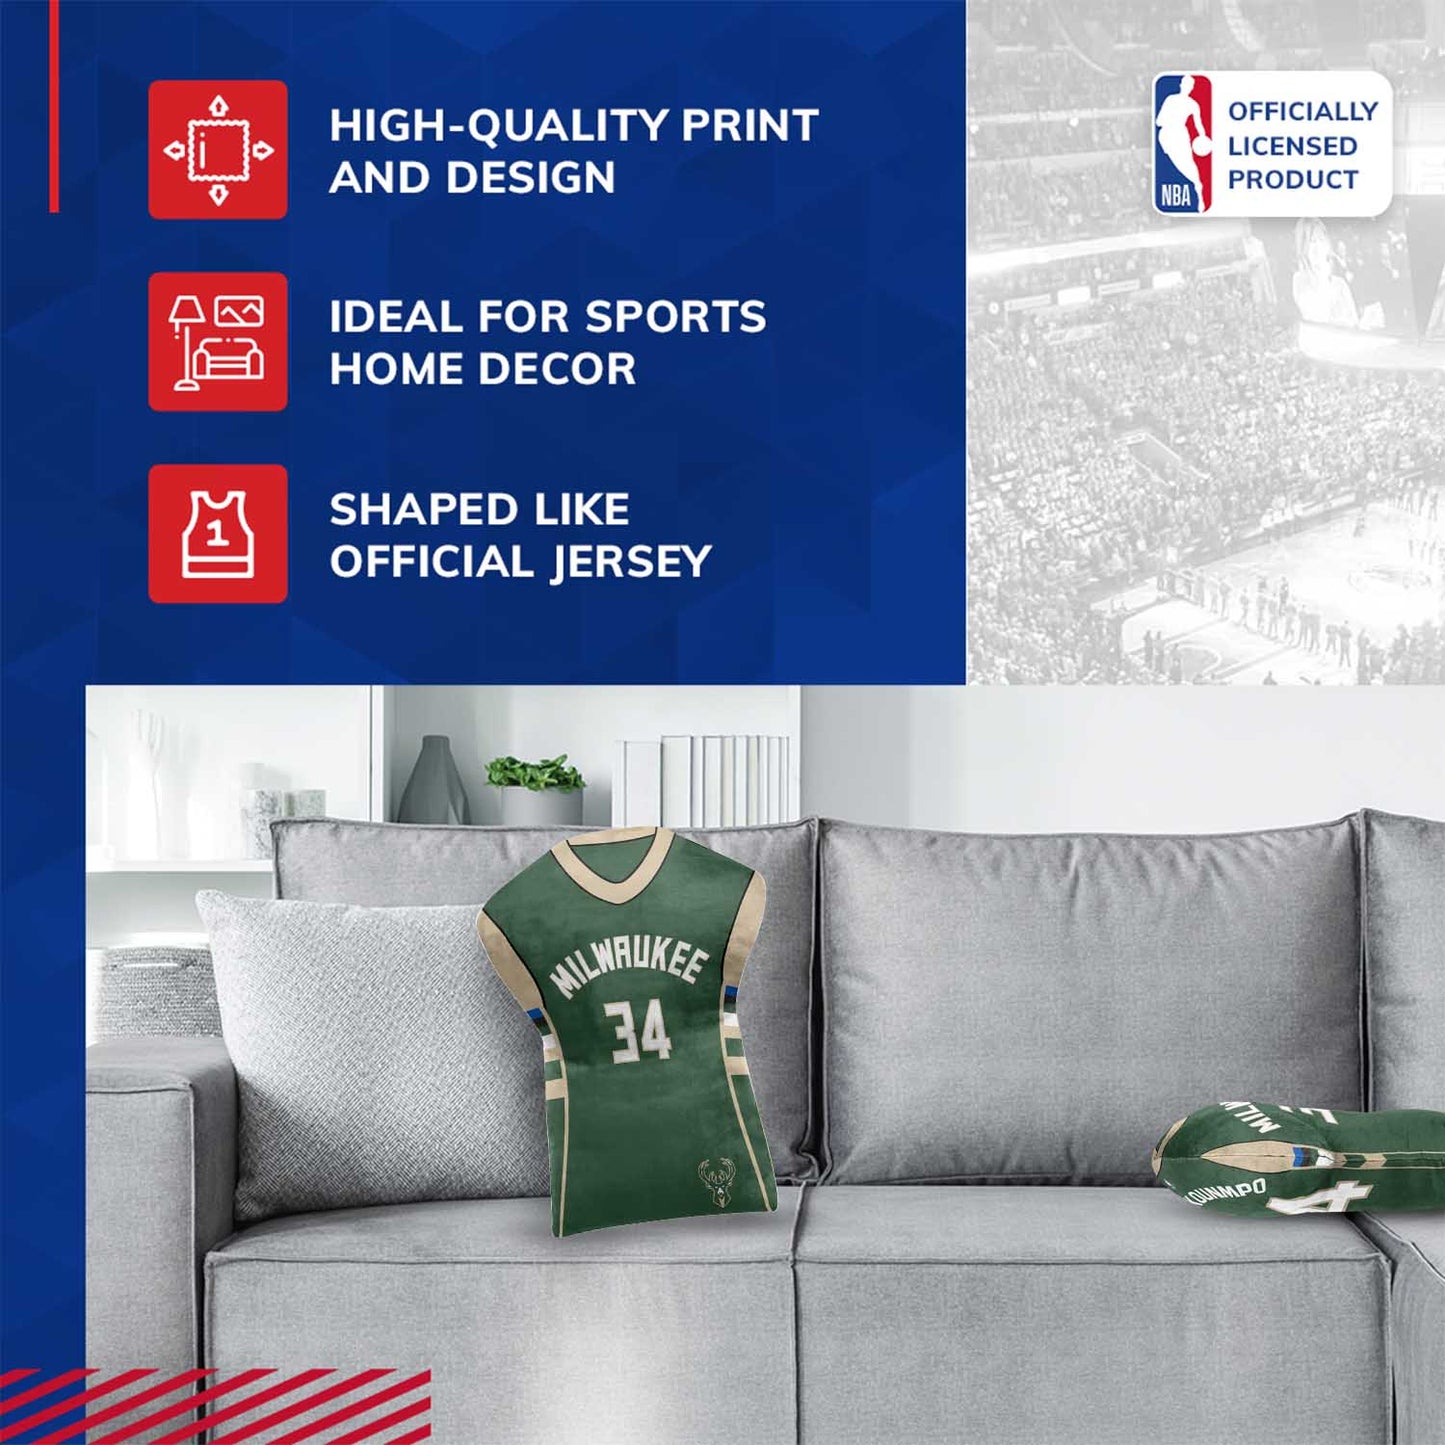 Milwaukee Bucks NBA Travel Giannis Antetokounmpo Jersey Cloud Pillow Bedding Accessories - Green